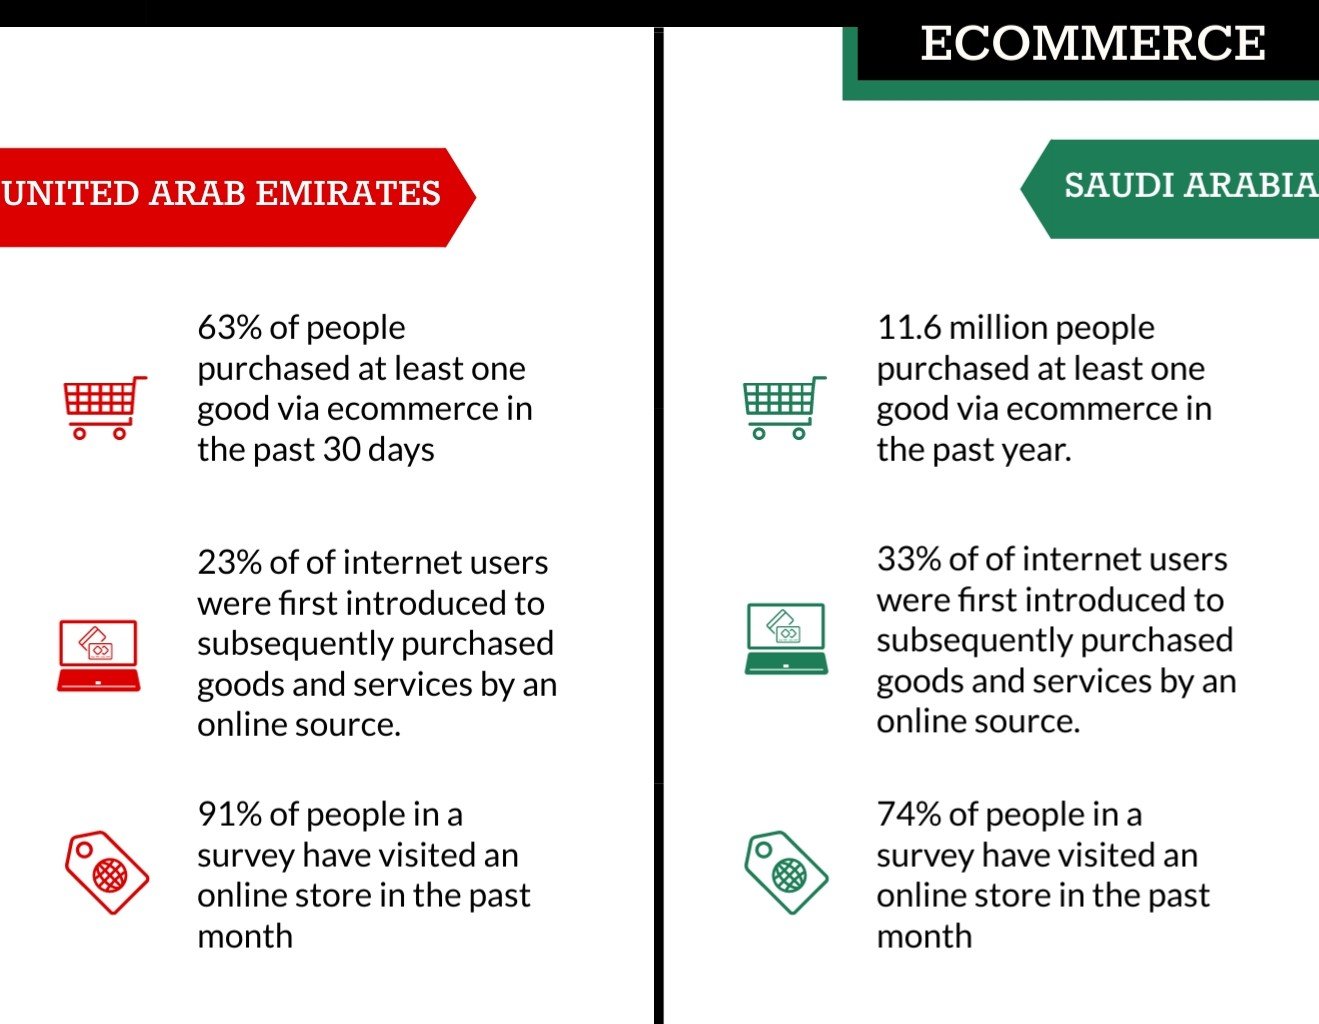 Saudi-Arabia-UAEs-Online-Environments (2)